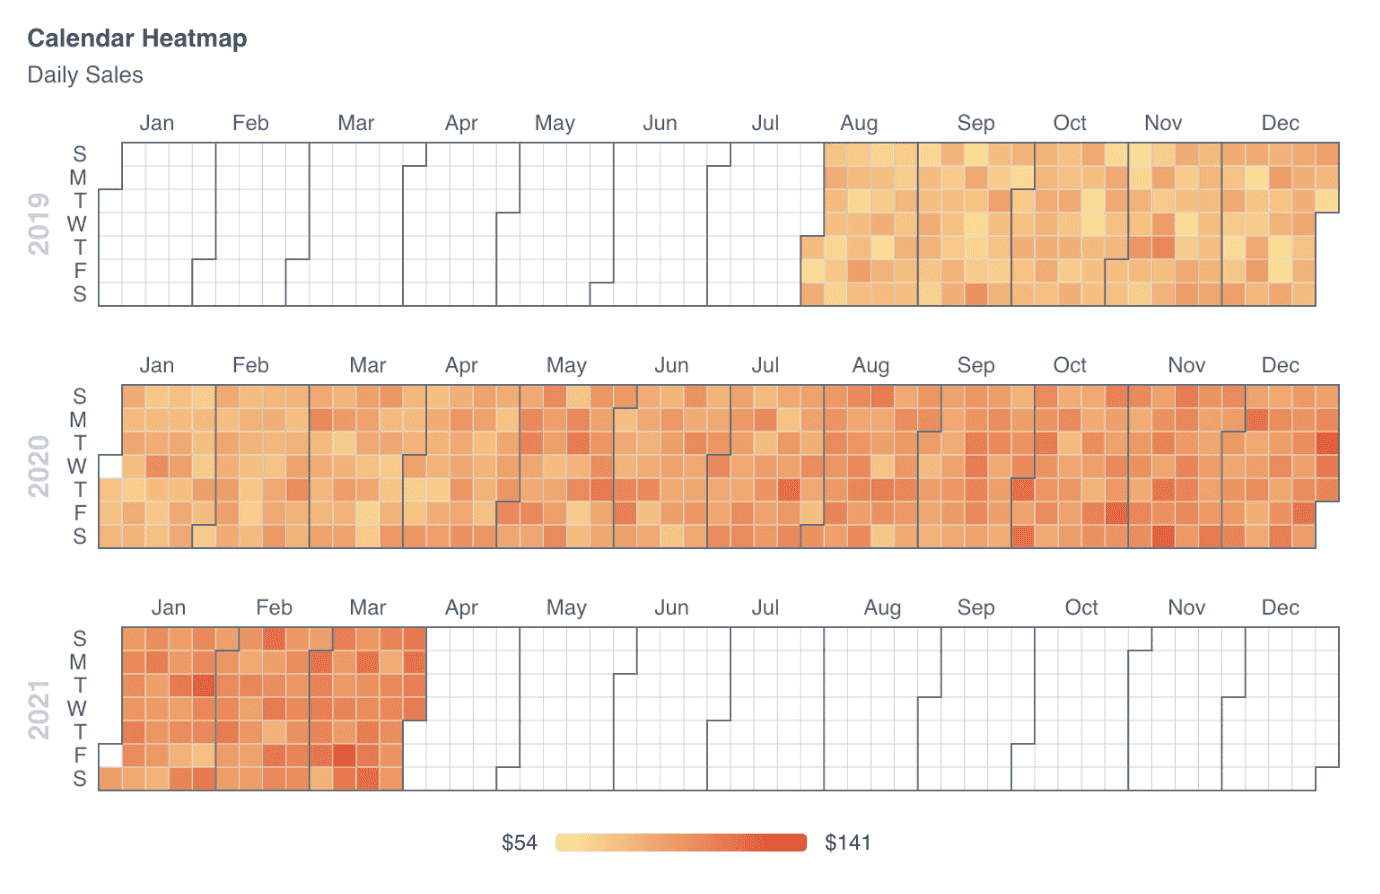 Calendar heatmap with multiple years